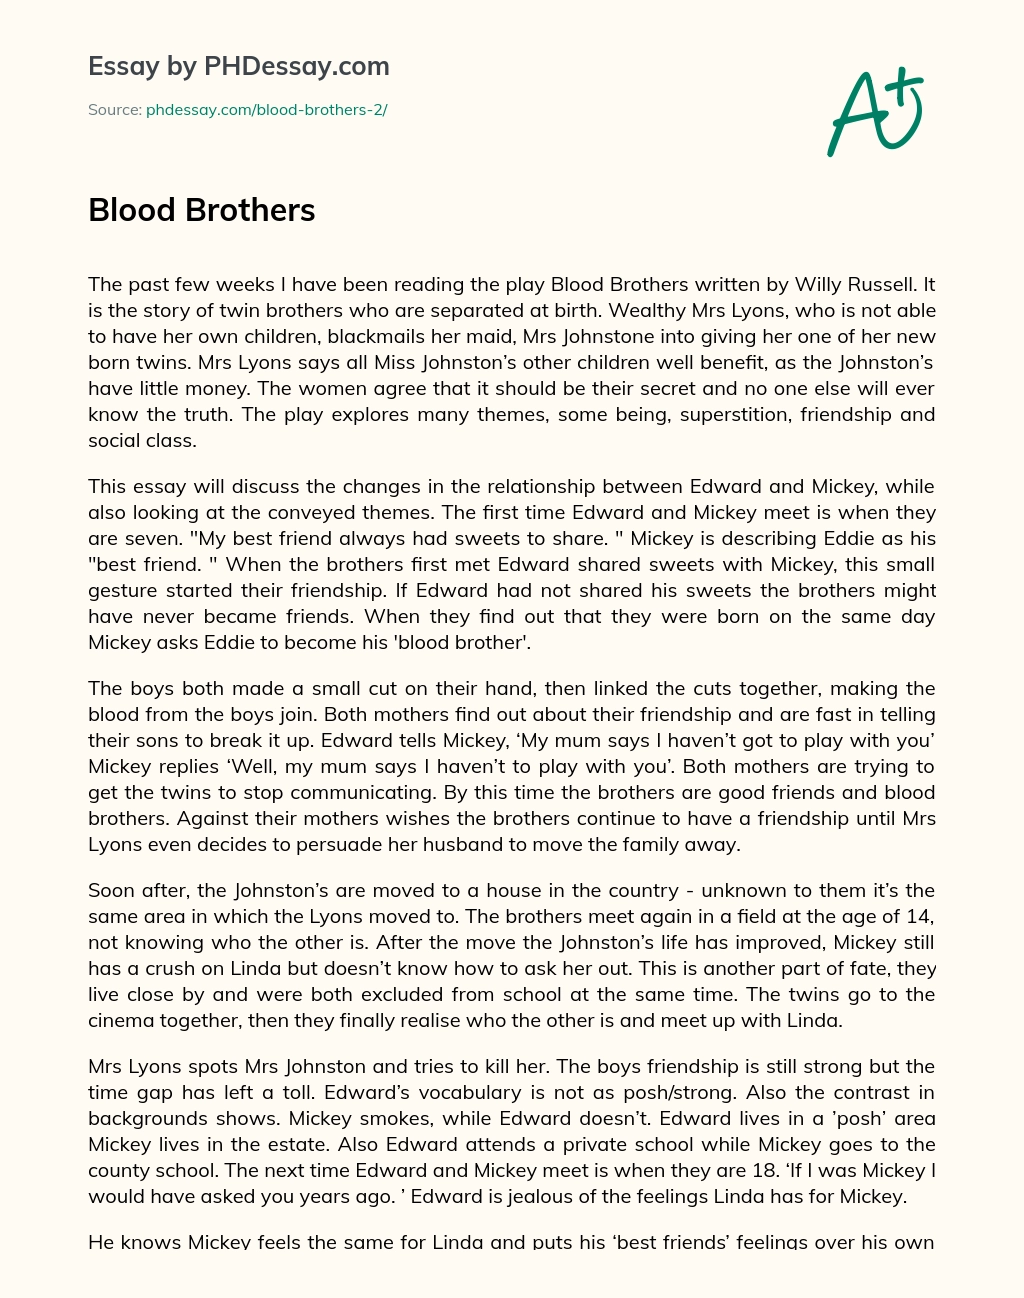 essay on blood brothers